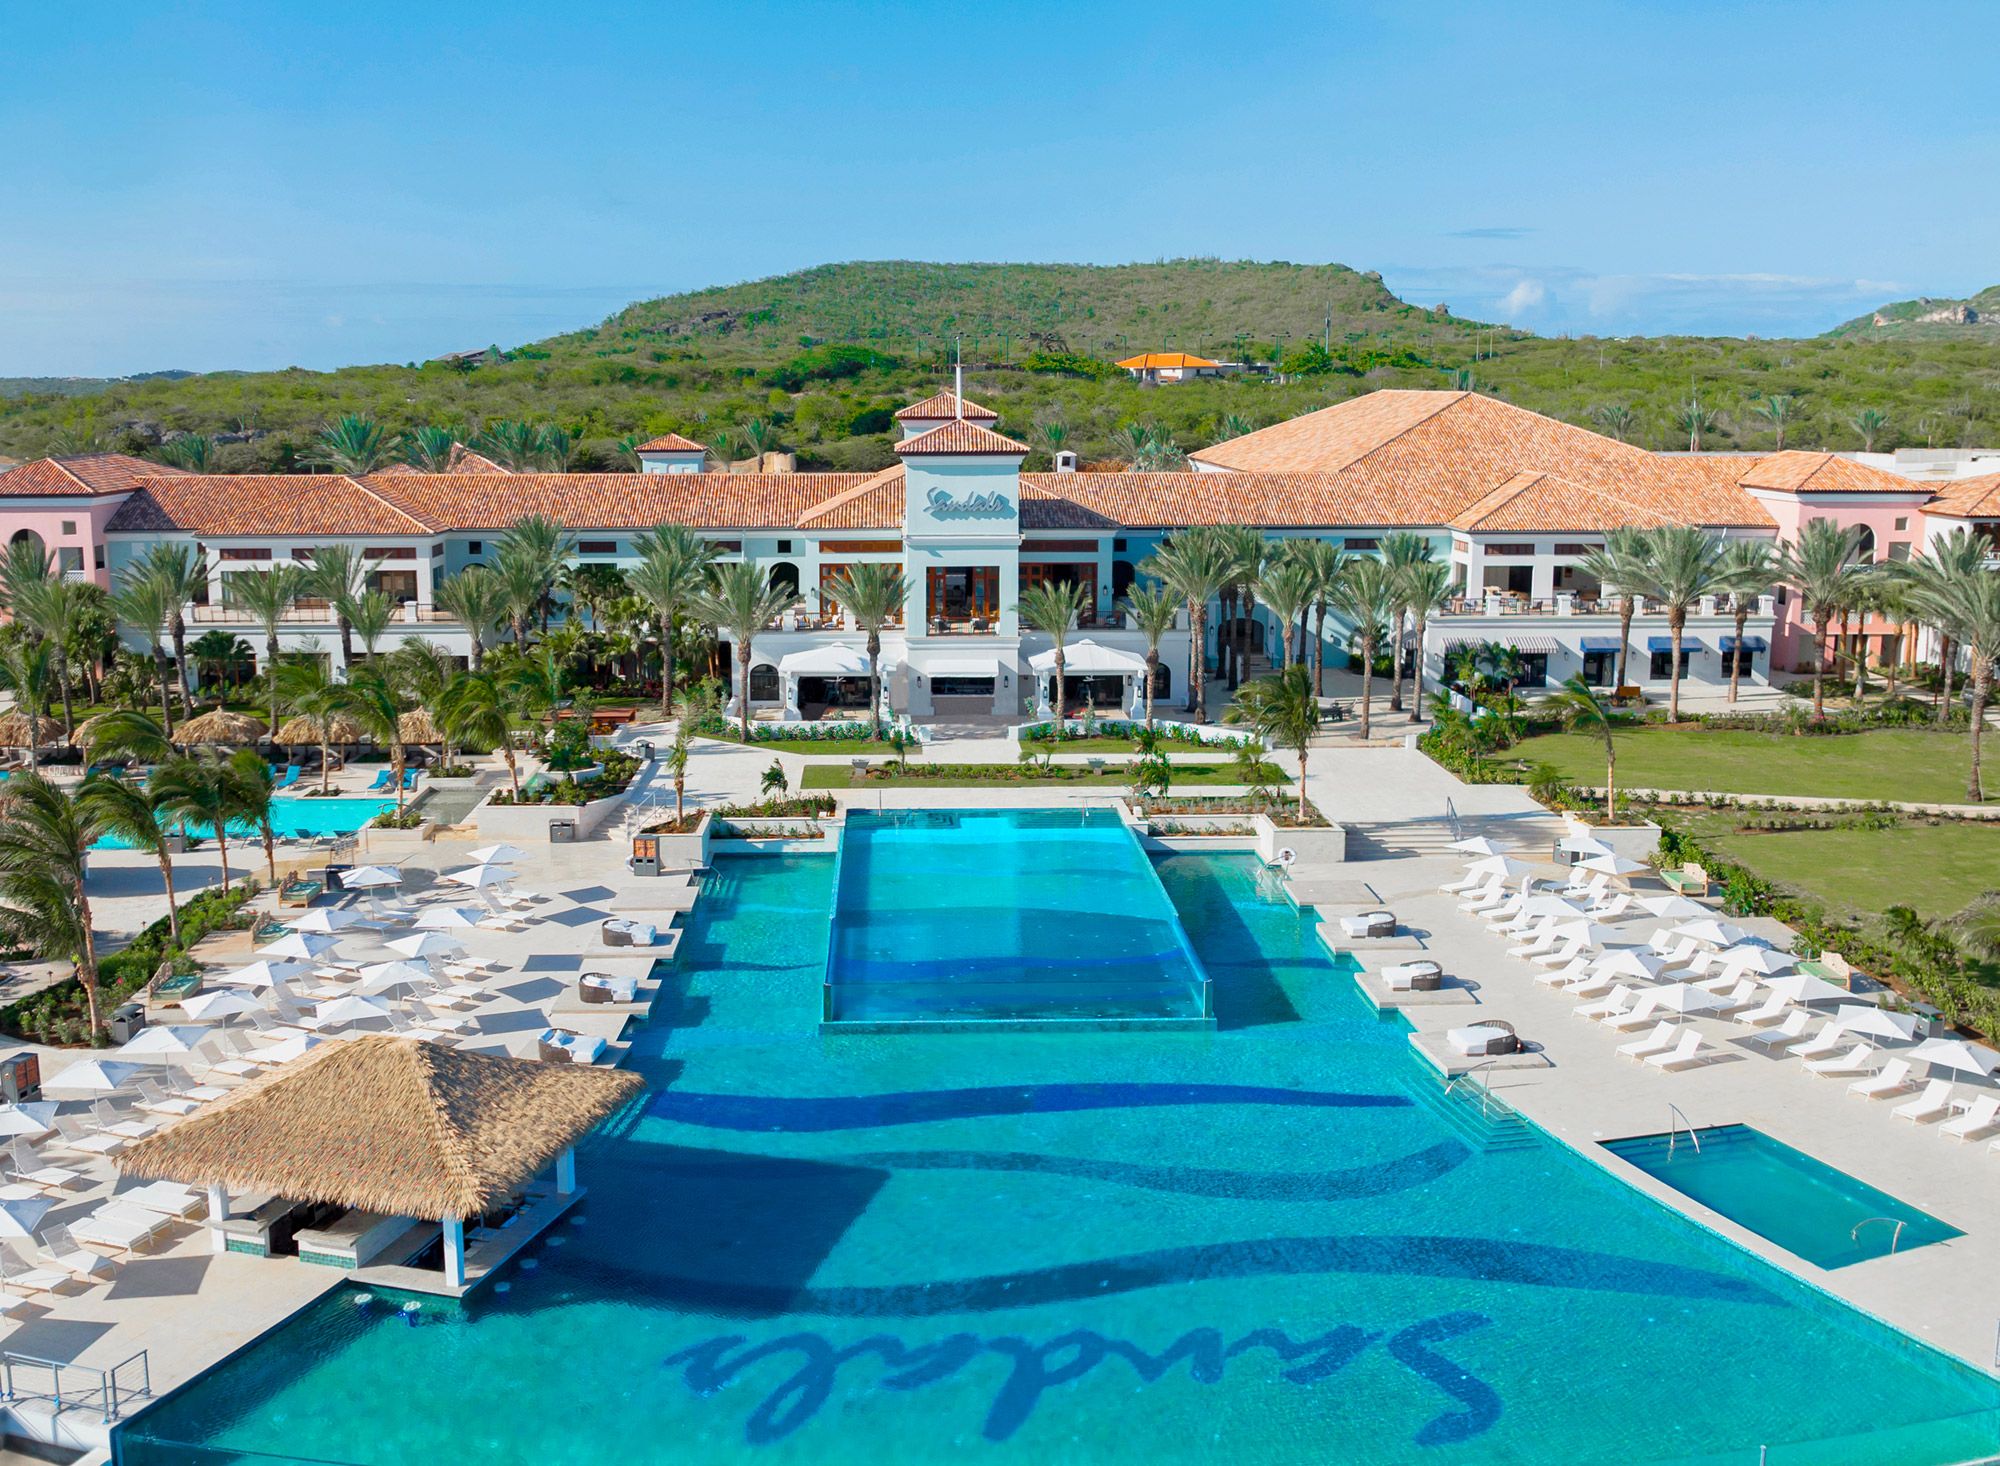 Sandals Ochi Beach Resort $417. Ocho Rios Hotel Deals & Reviews - KAYAK